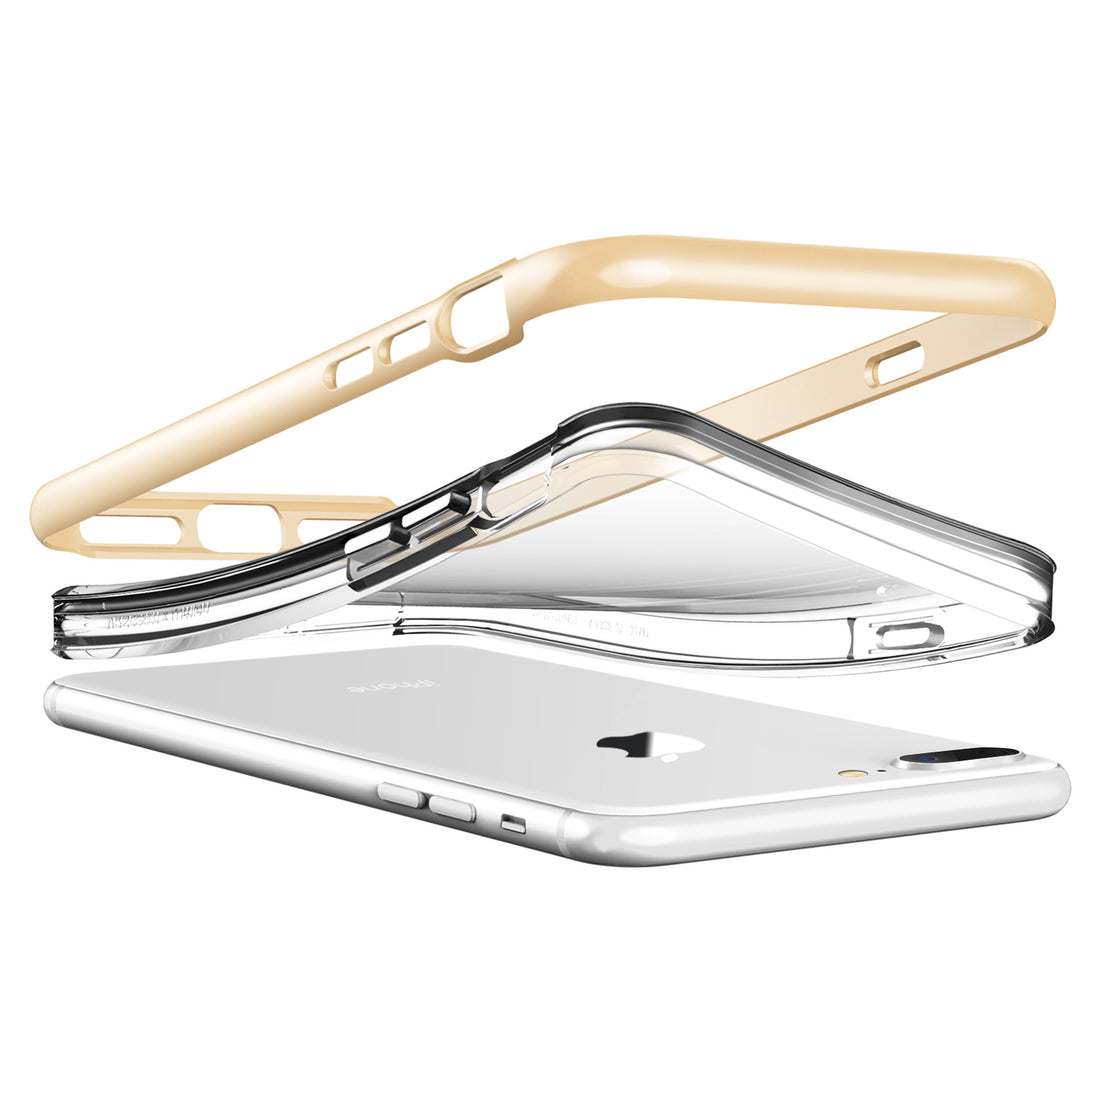 iPhone 7 Plus / 8 Plus Cases  Stylish & Protective - BURGA